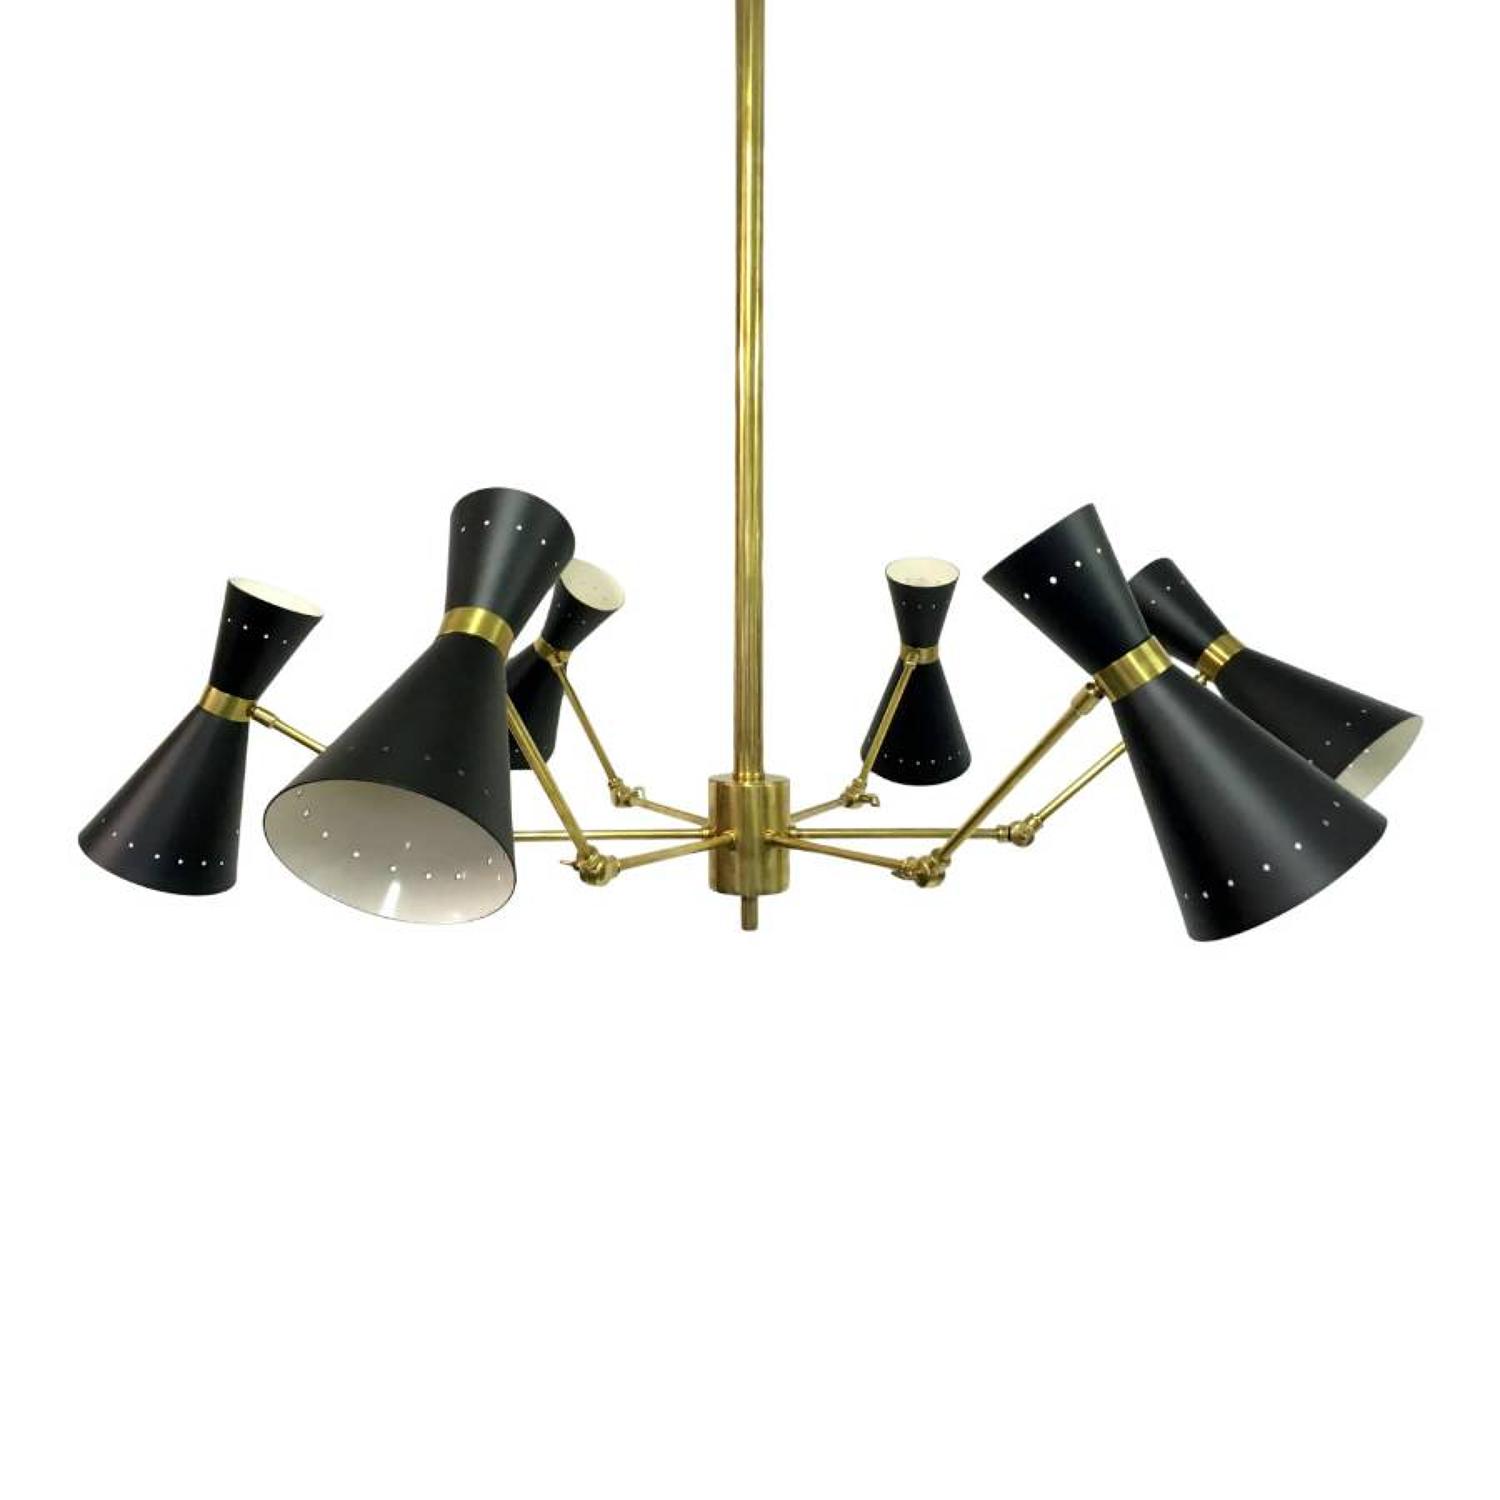 1950s style Italian brass and enamel ceiling light